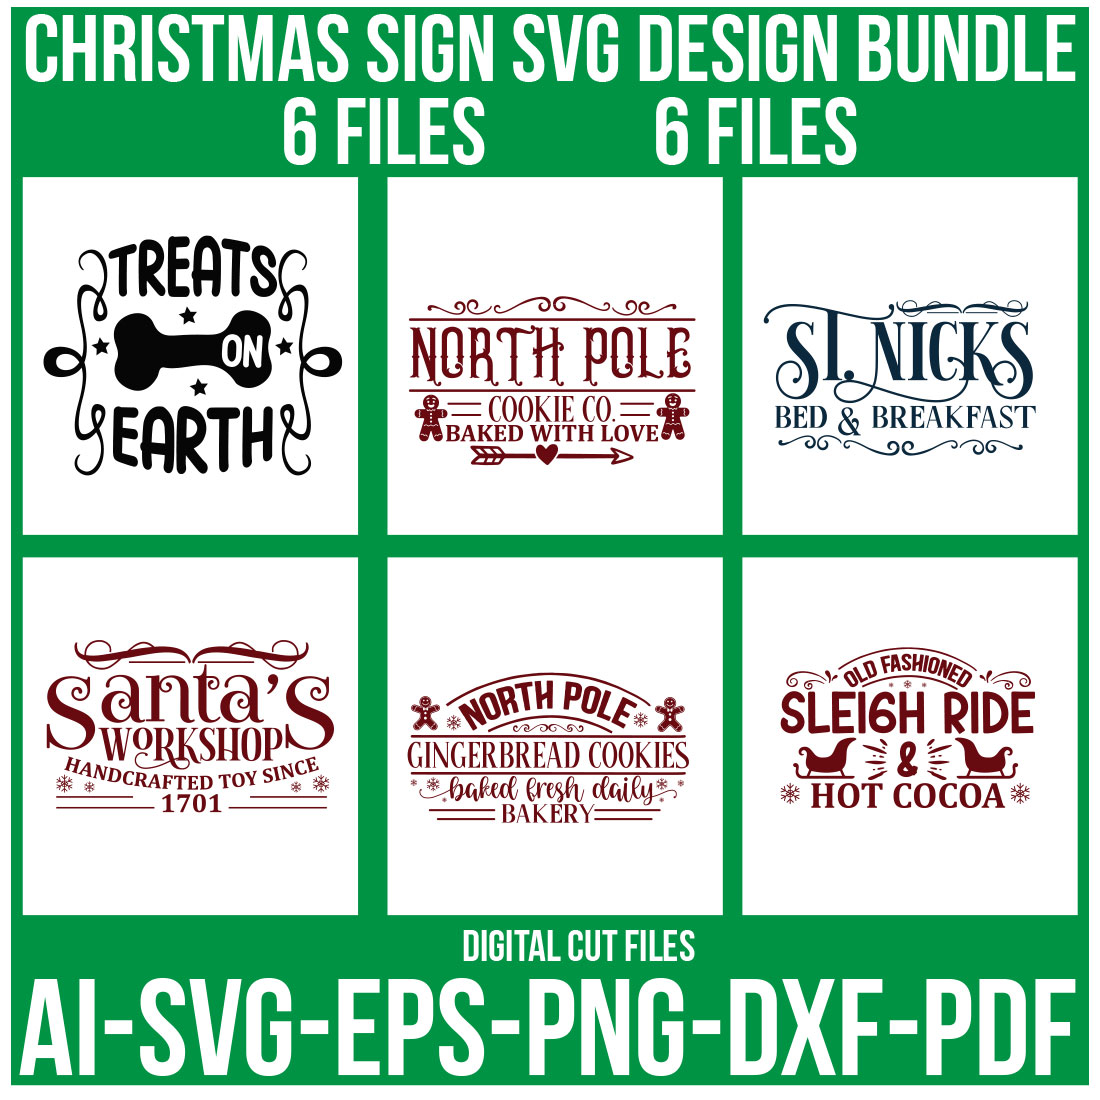 Christmas Sign SVG Bundle cover image.